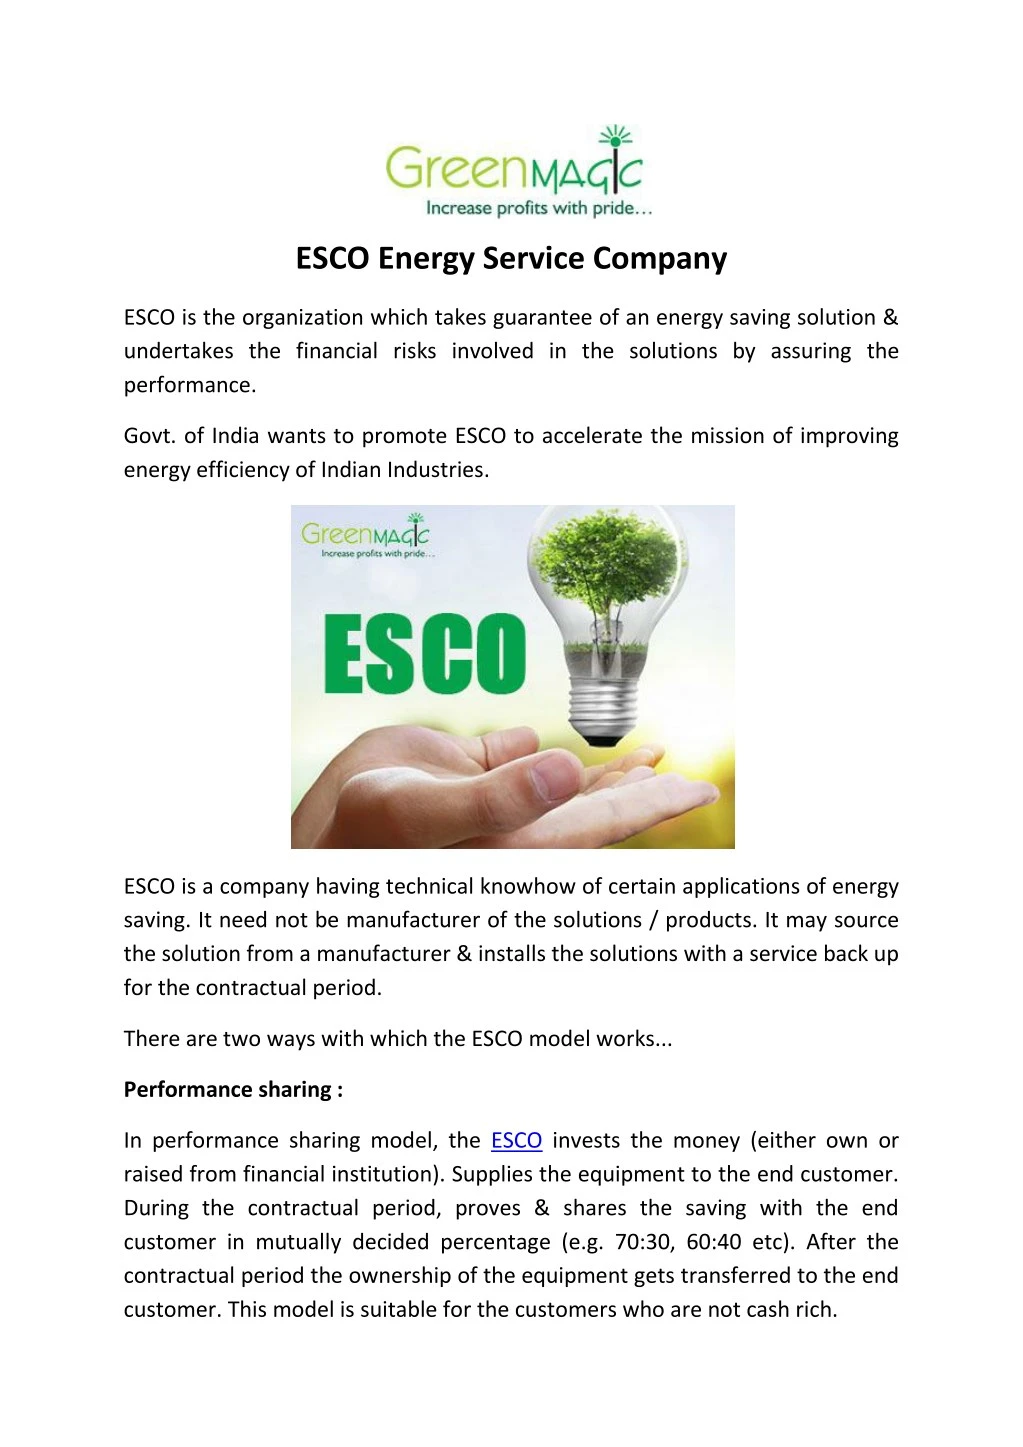 esco energy service company